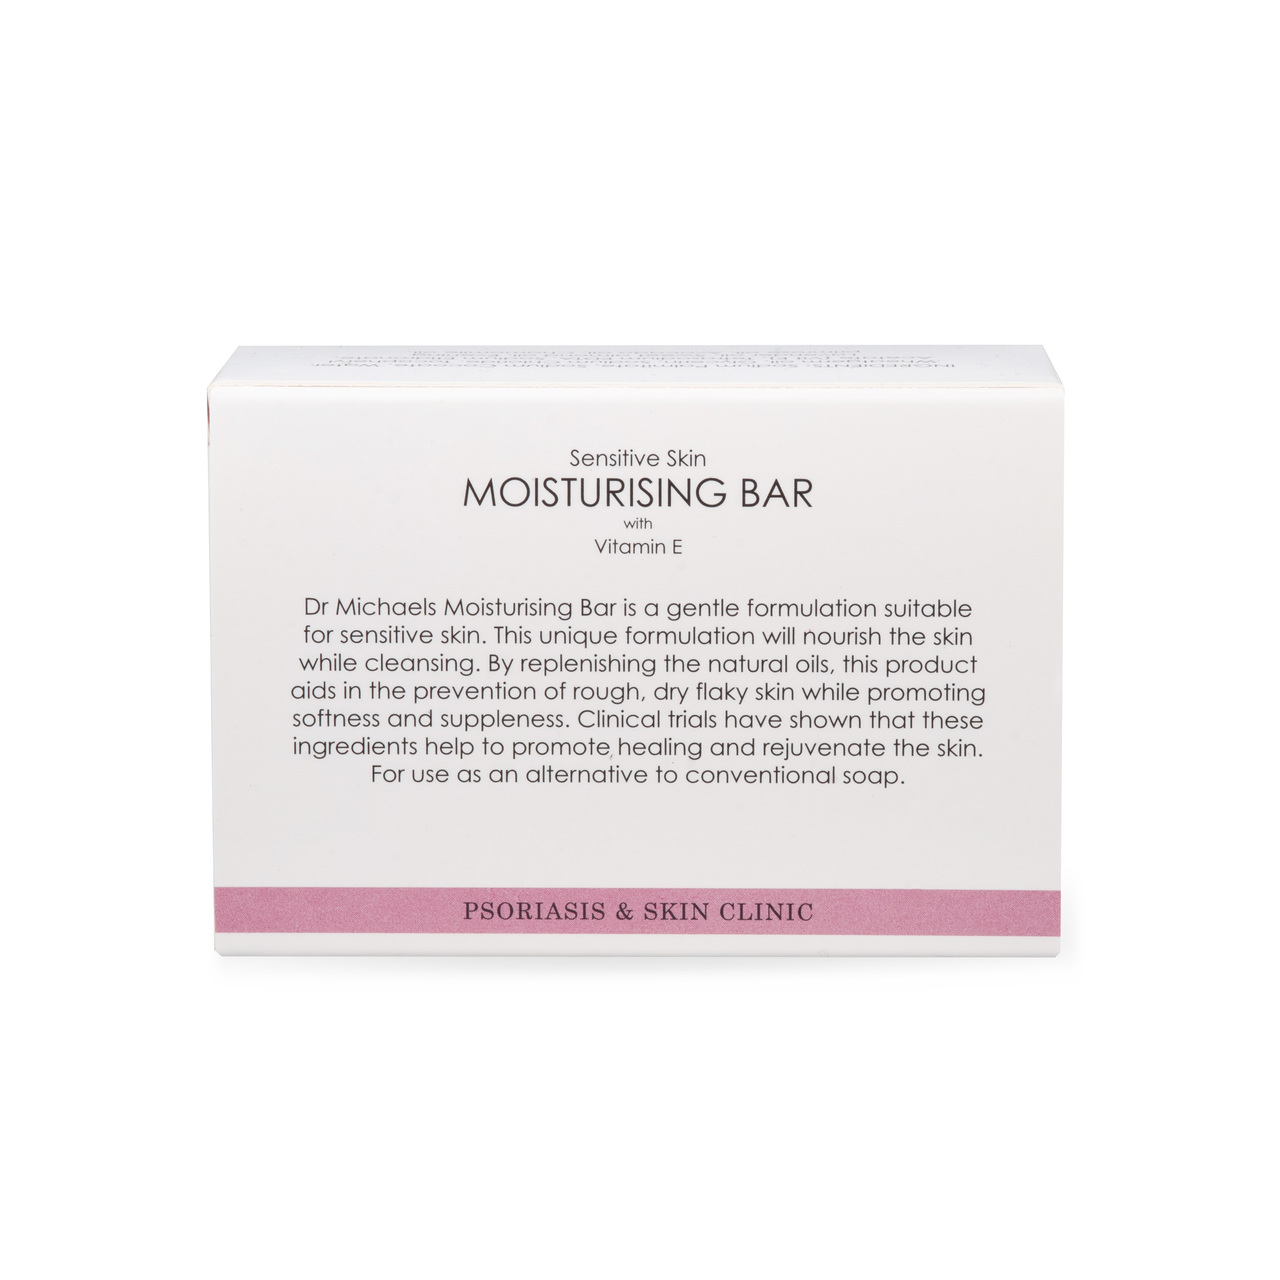 20/04/14/10140303-moisturising-bar-back-no.jpg